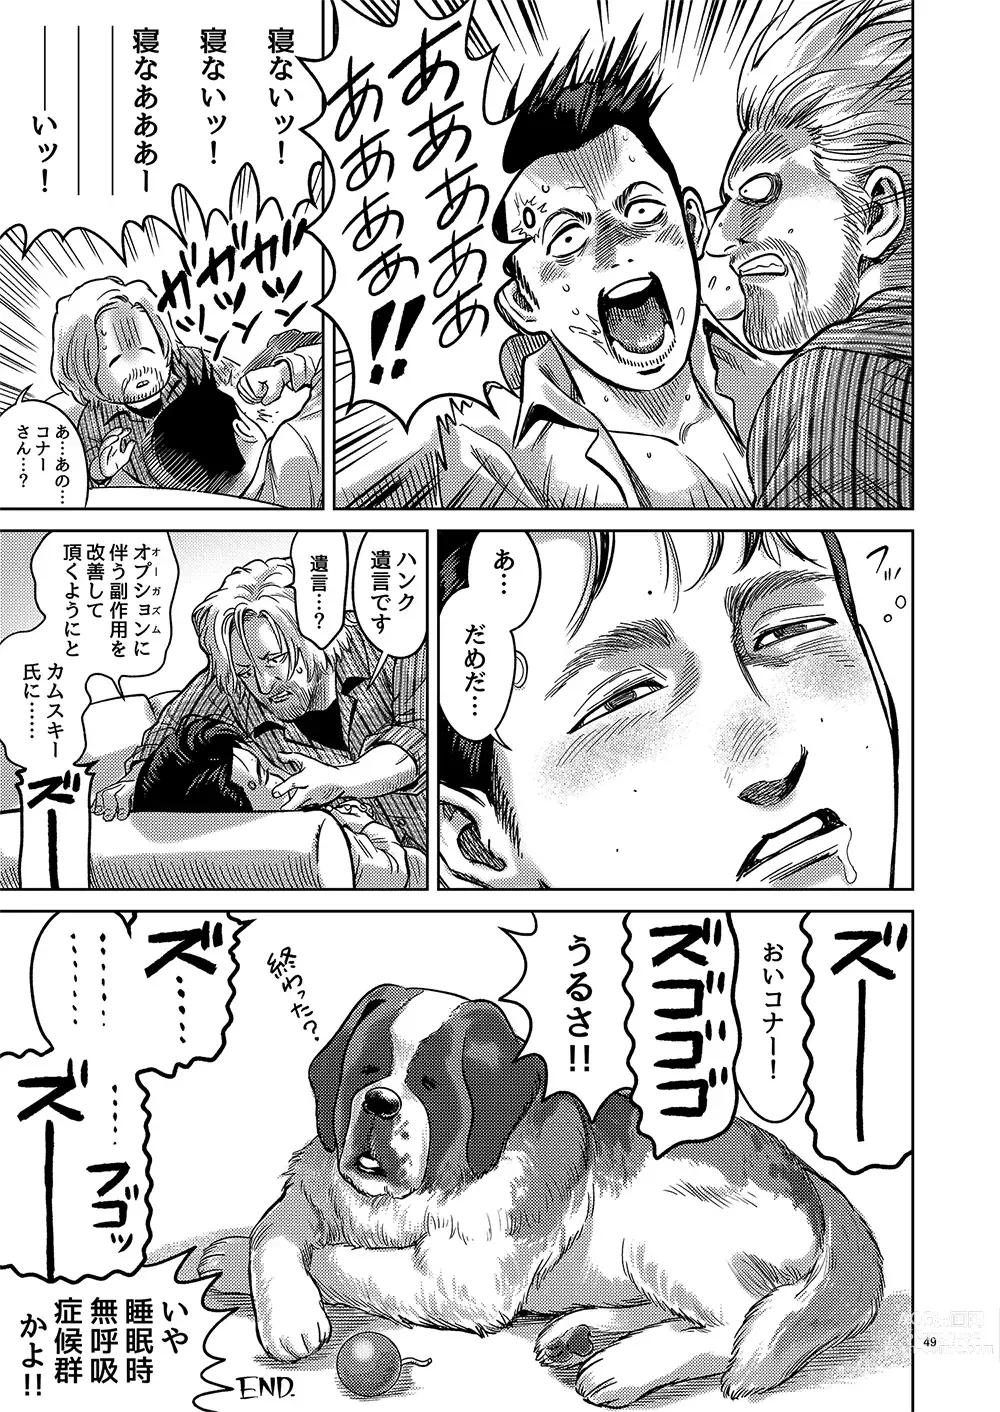 Page 48 of doujinshi Distortion